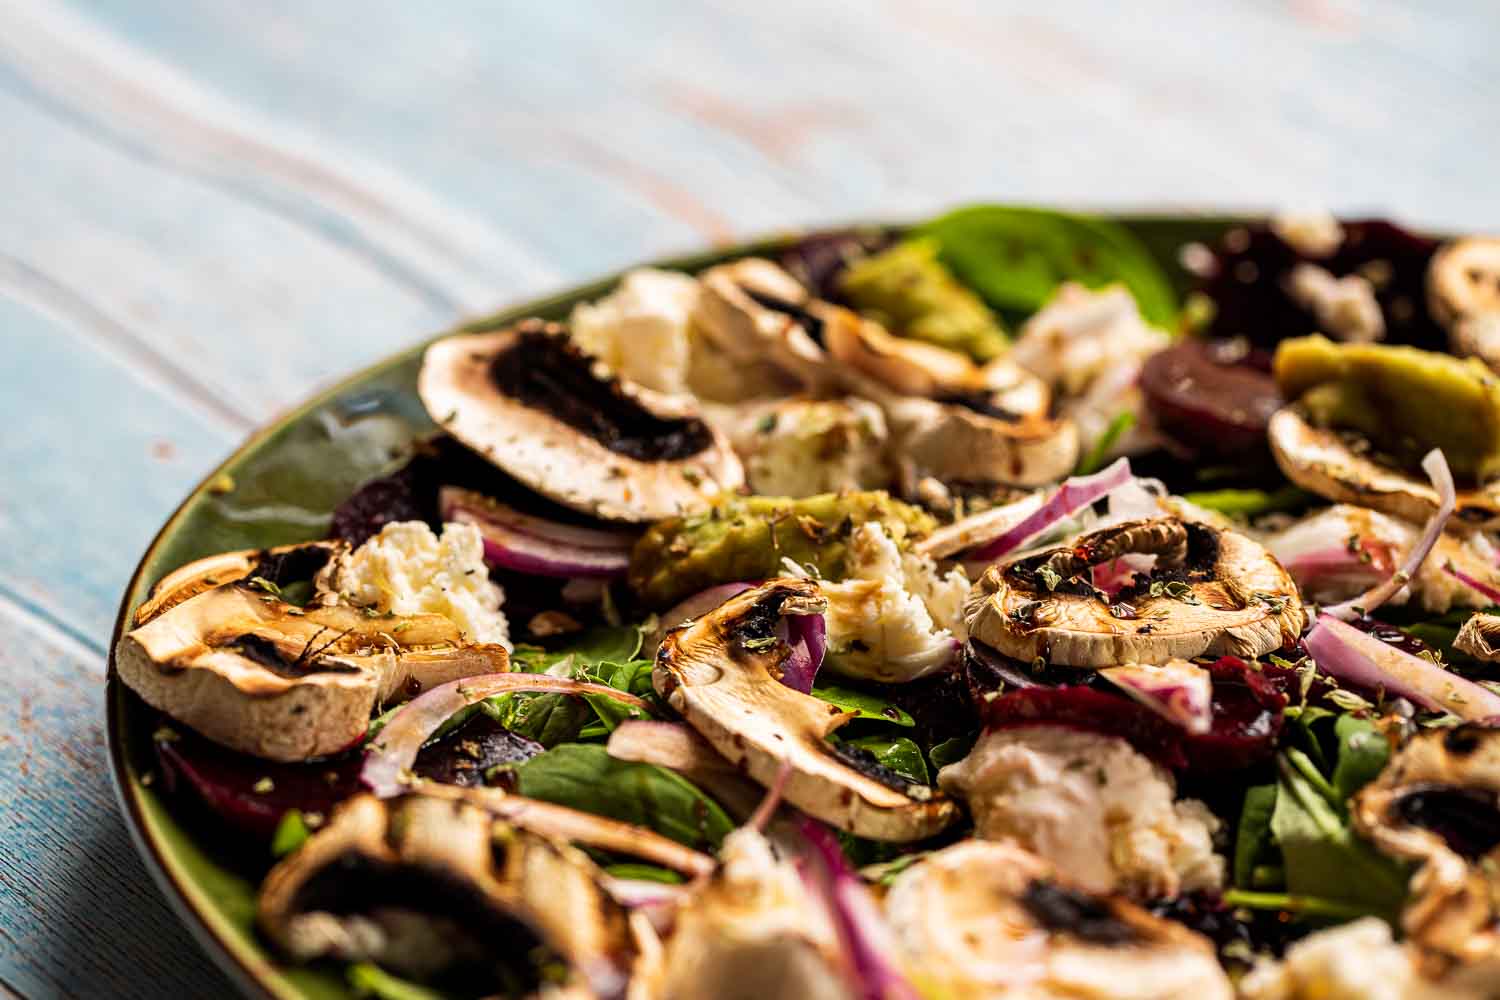 Beet salad with spinachs, avocado, mushrooms, purple onion, mozzarella and Pomegranate vinagreitte